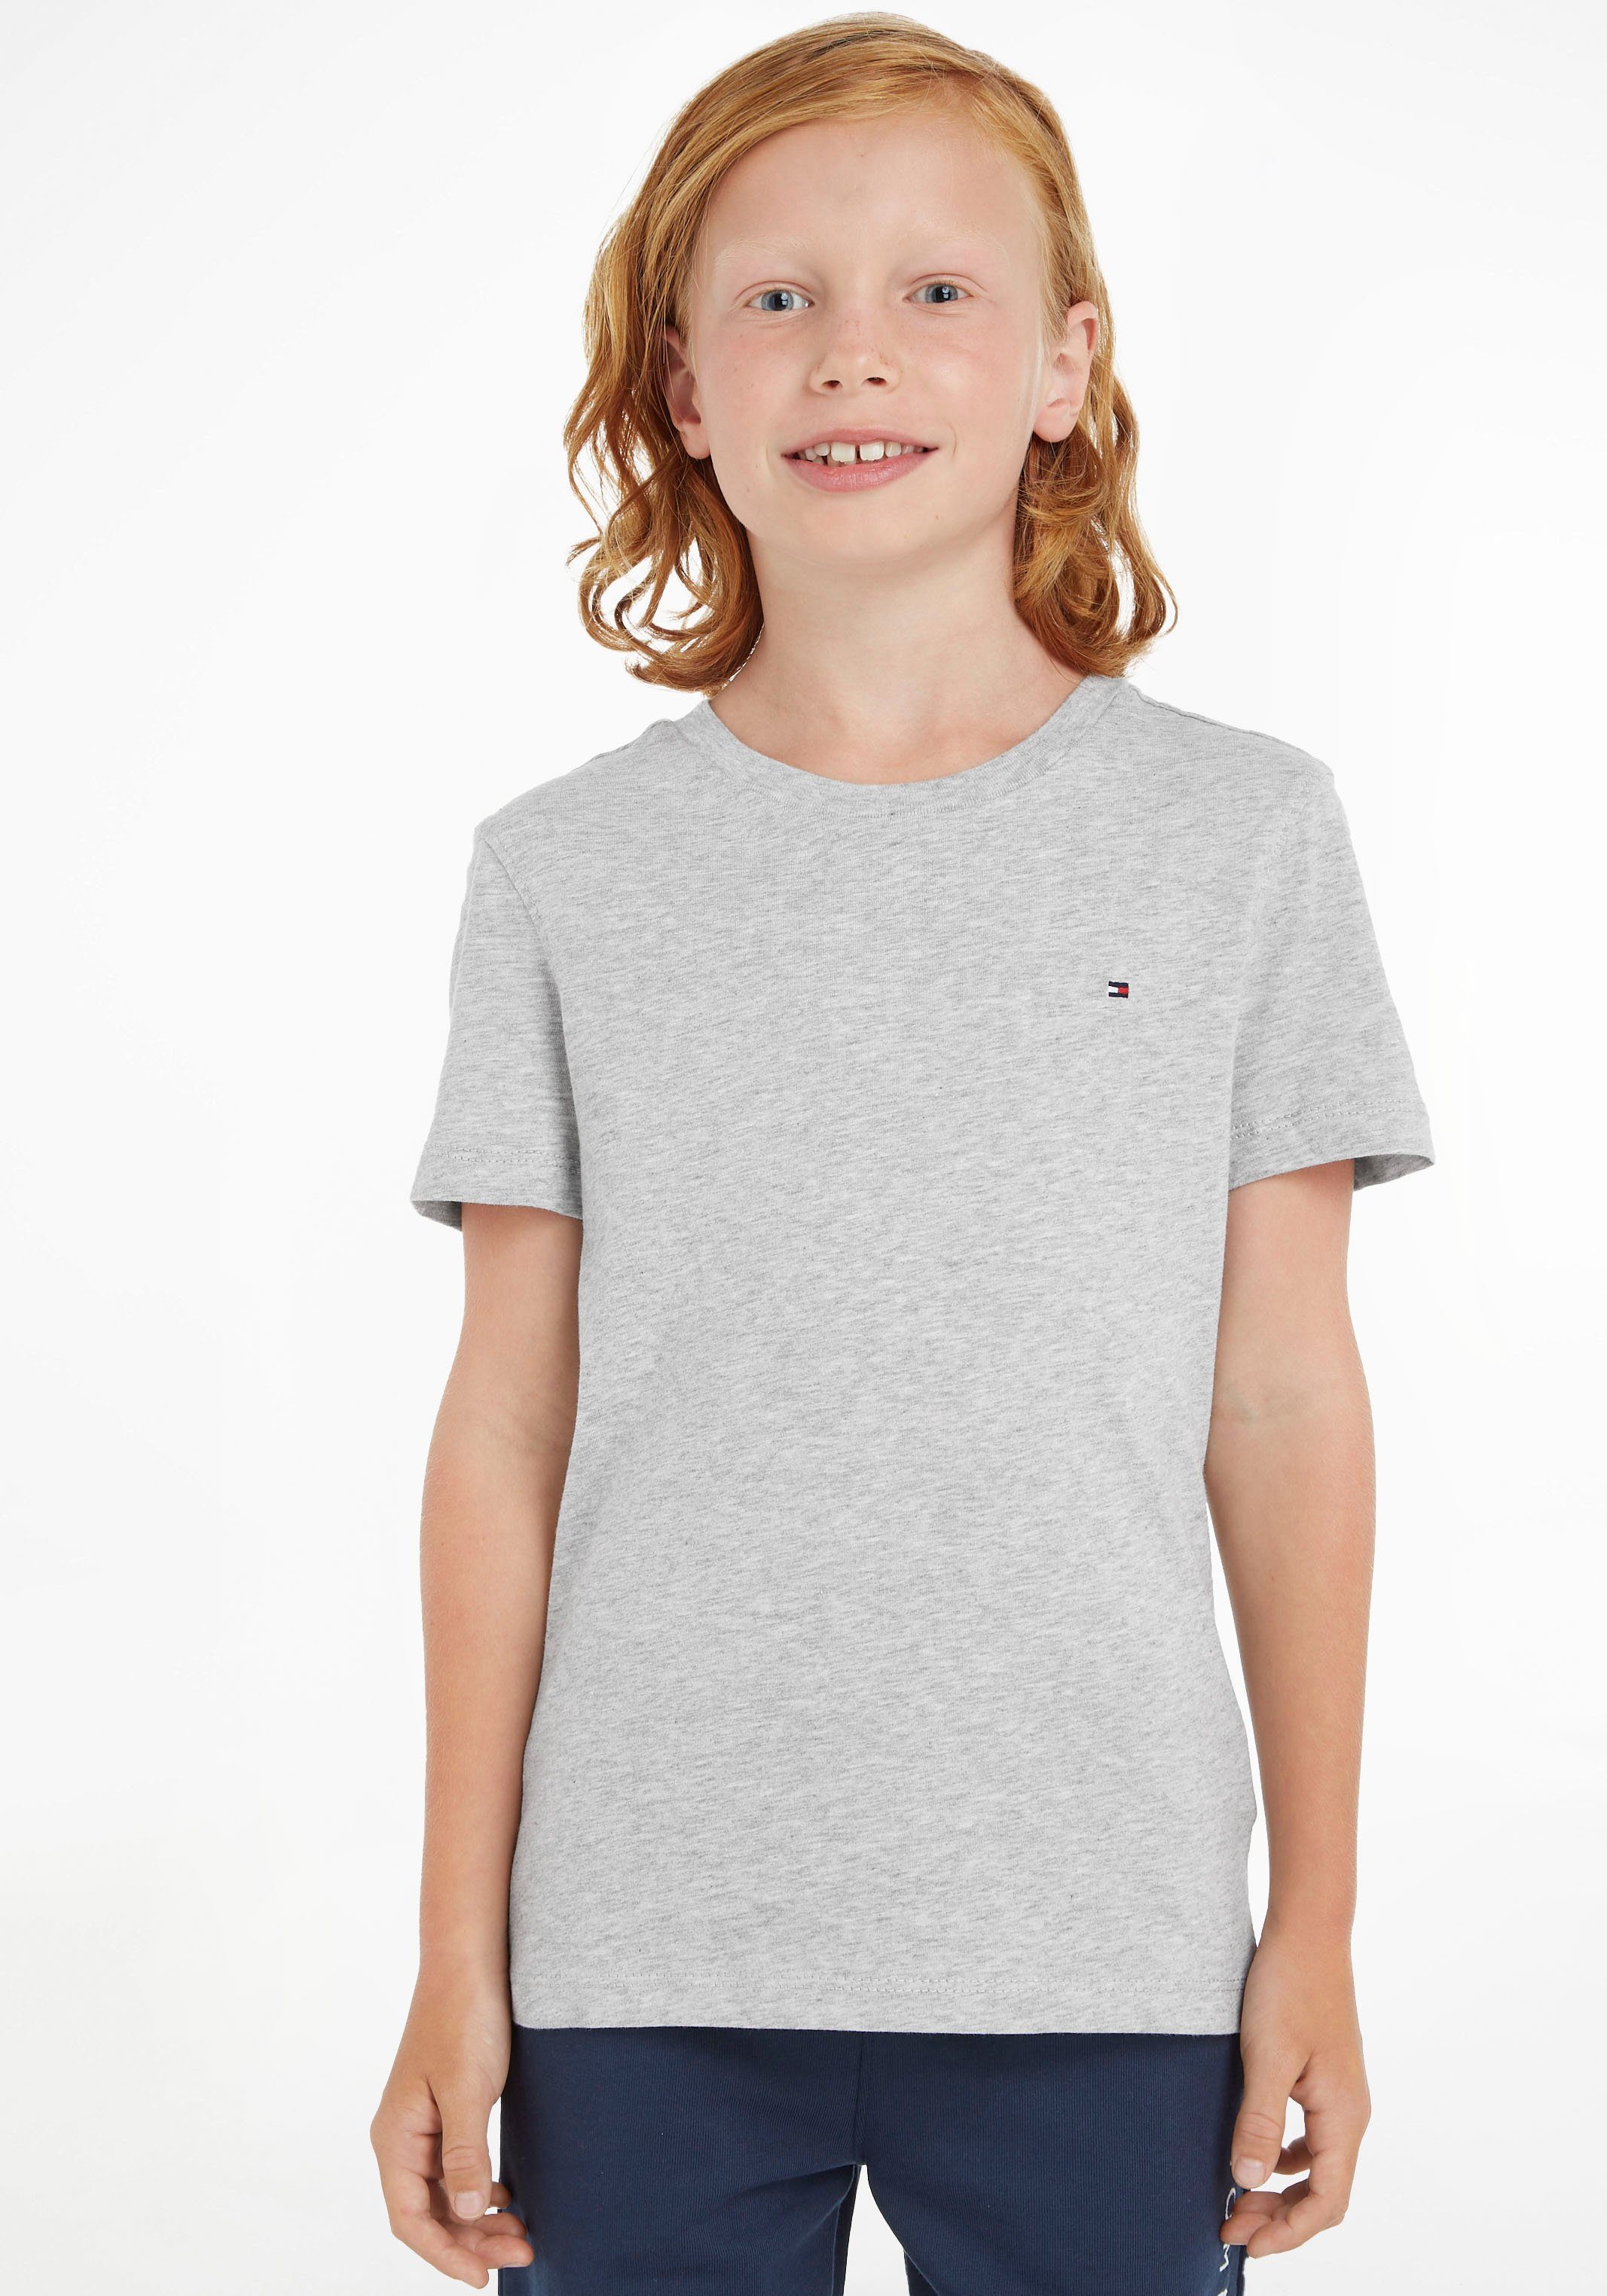 Tommy Hilfiger T-Shirt BOYS Kids Kinder BASIC CN MiniMe Junior KNIT